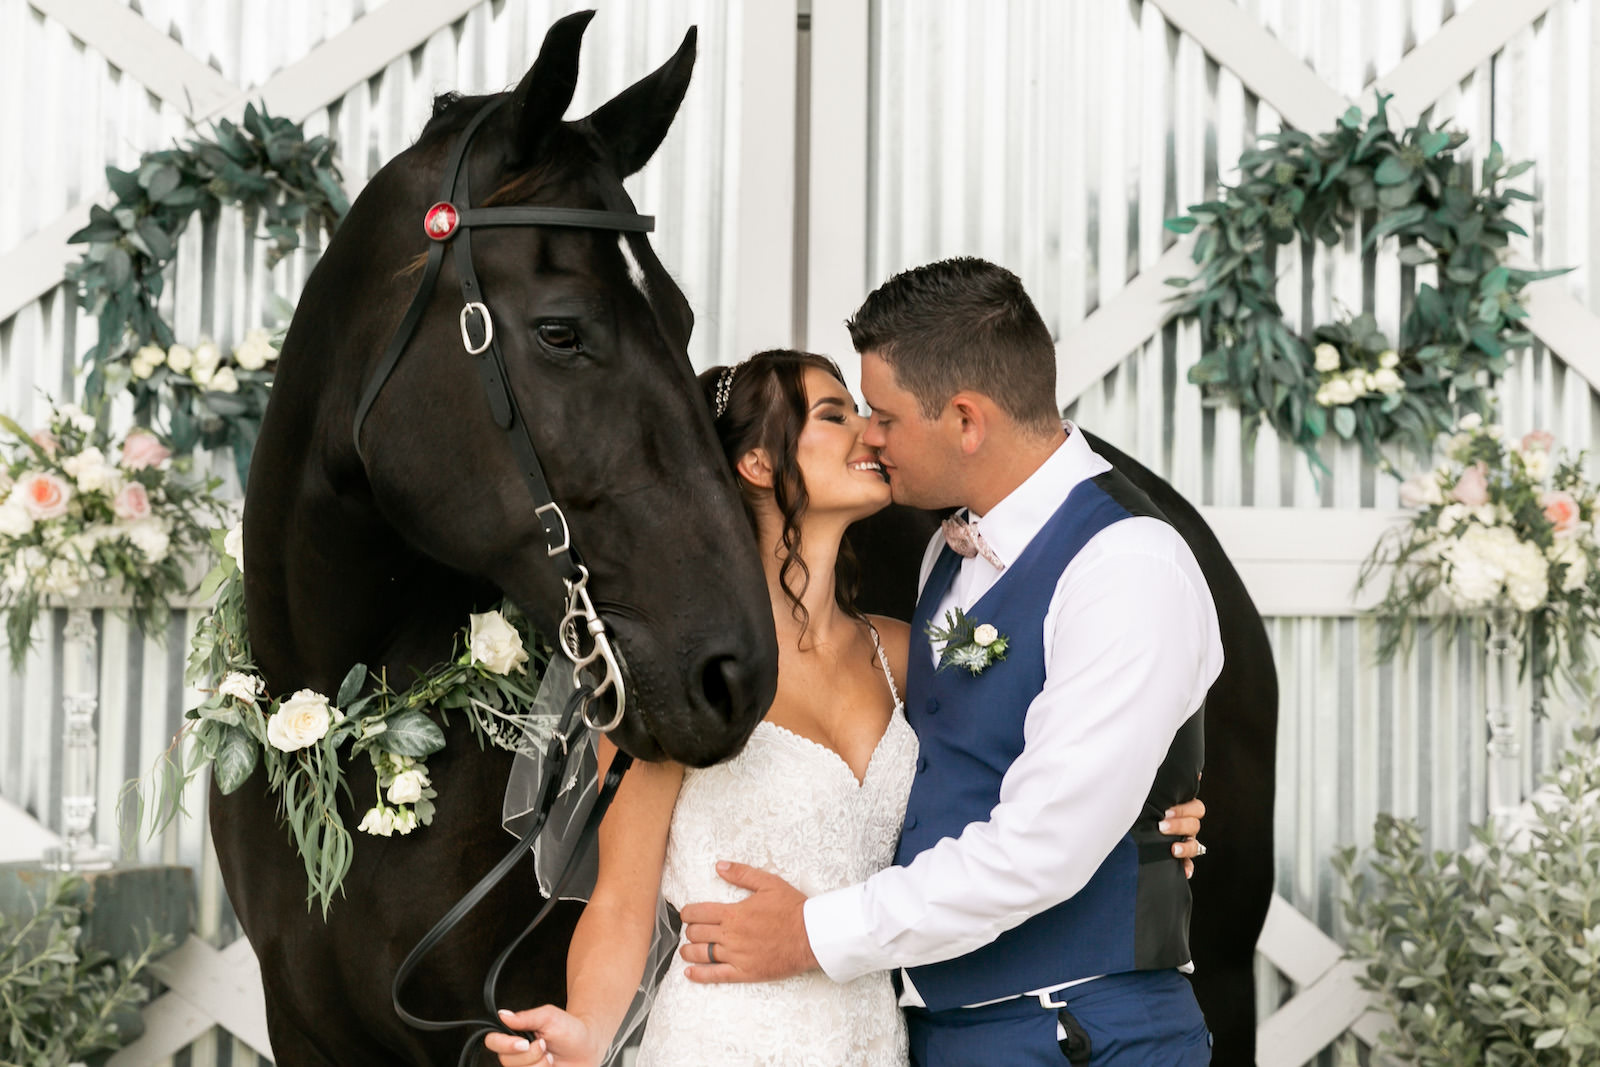 Bride and Groom Intimate Rustic Wedding Portrait with Black Horse | Rustic Wedding Venue Florida Covington Farms